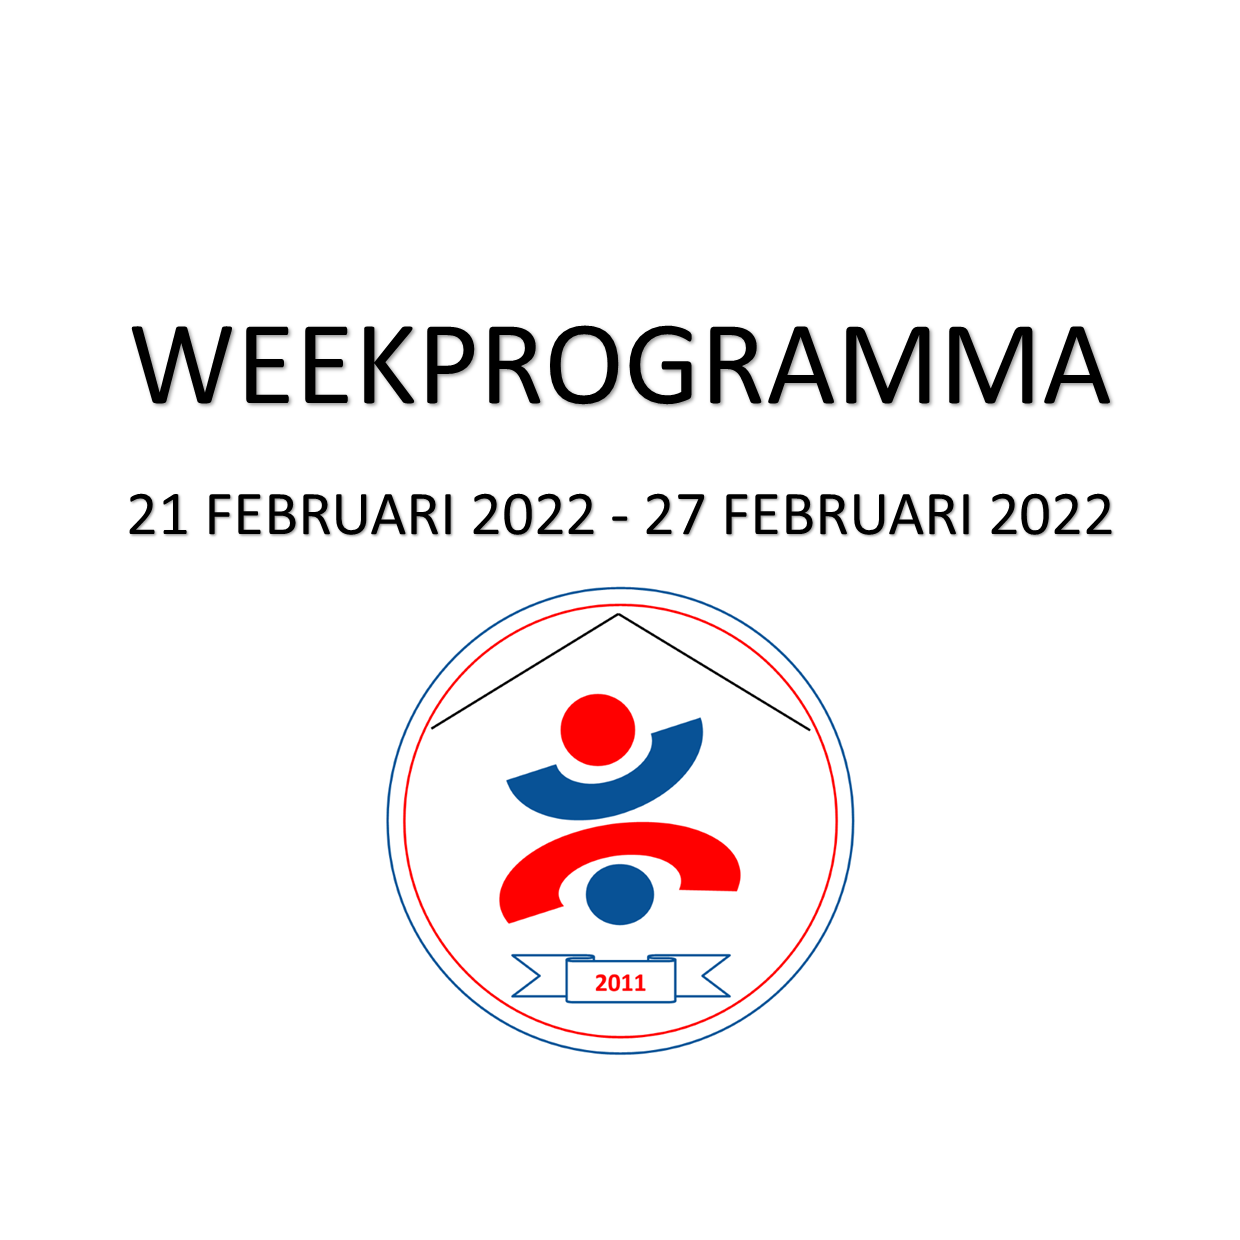 Weekprogramma van maandag 21 februari t/m zondag 27 februari 2022